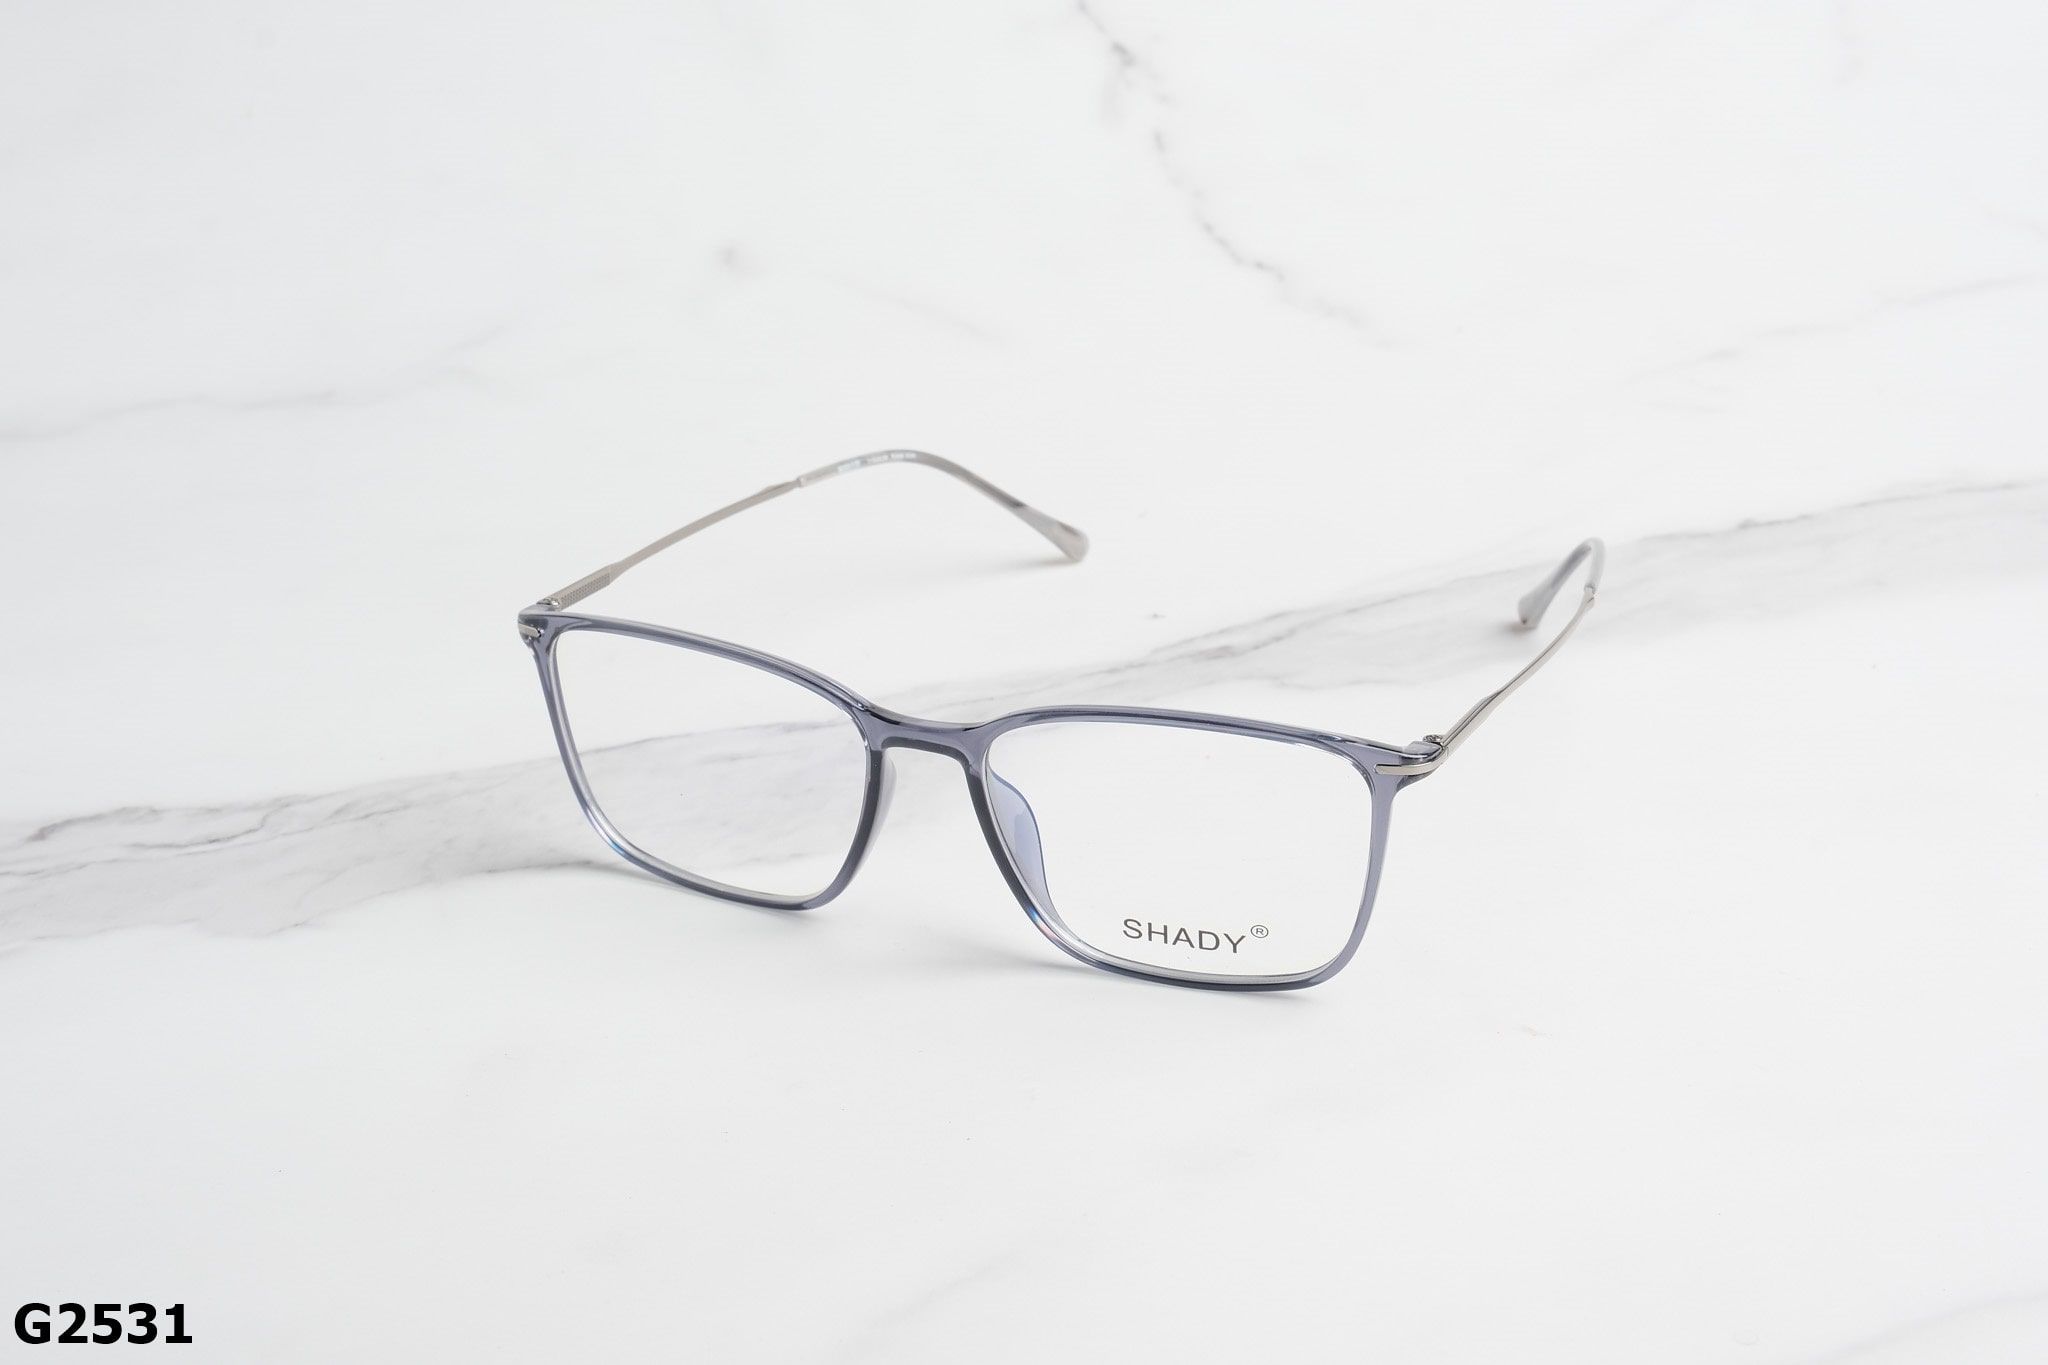  SHADY Eyewear - Glasses - G2531 